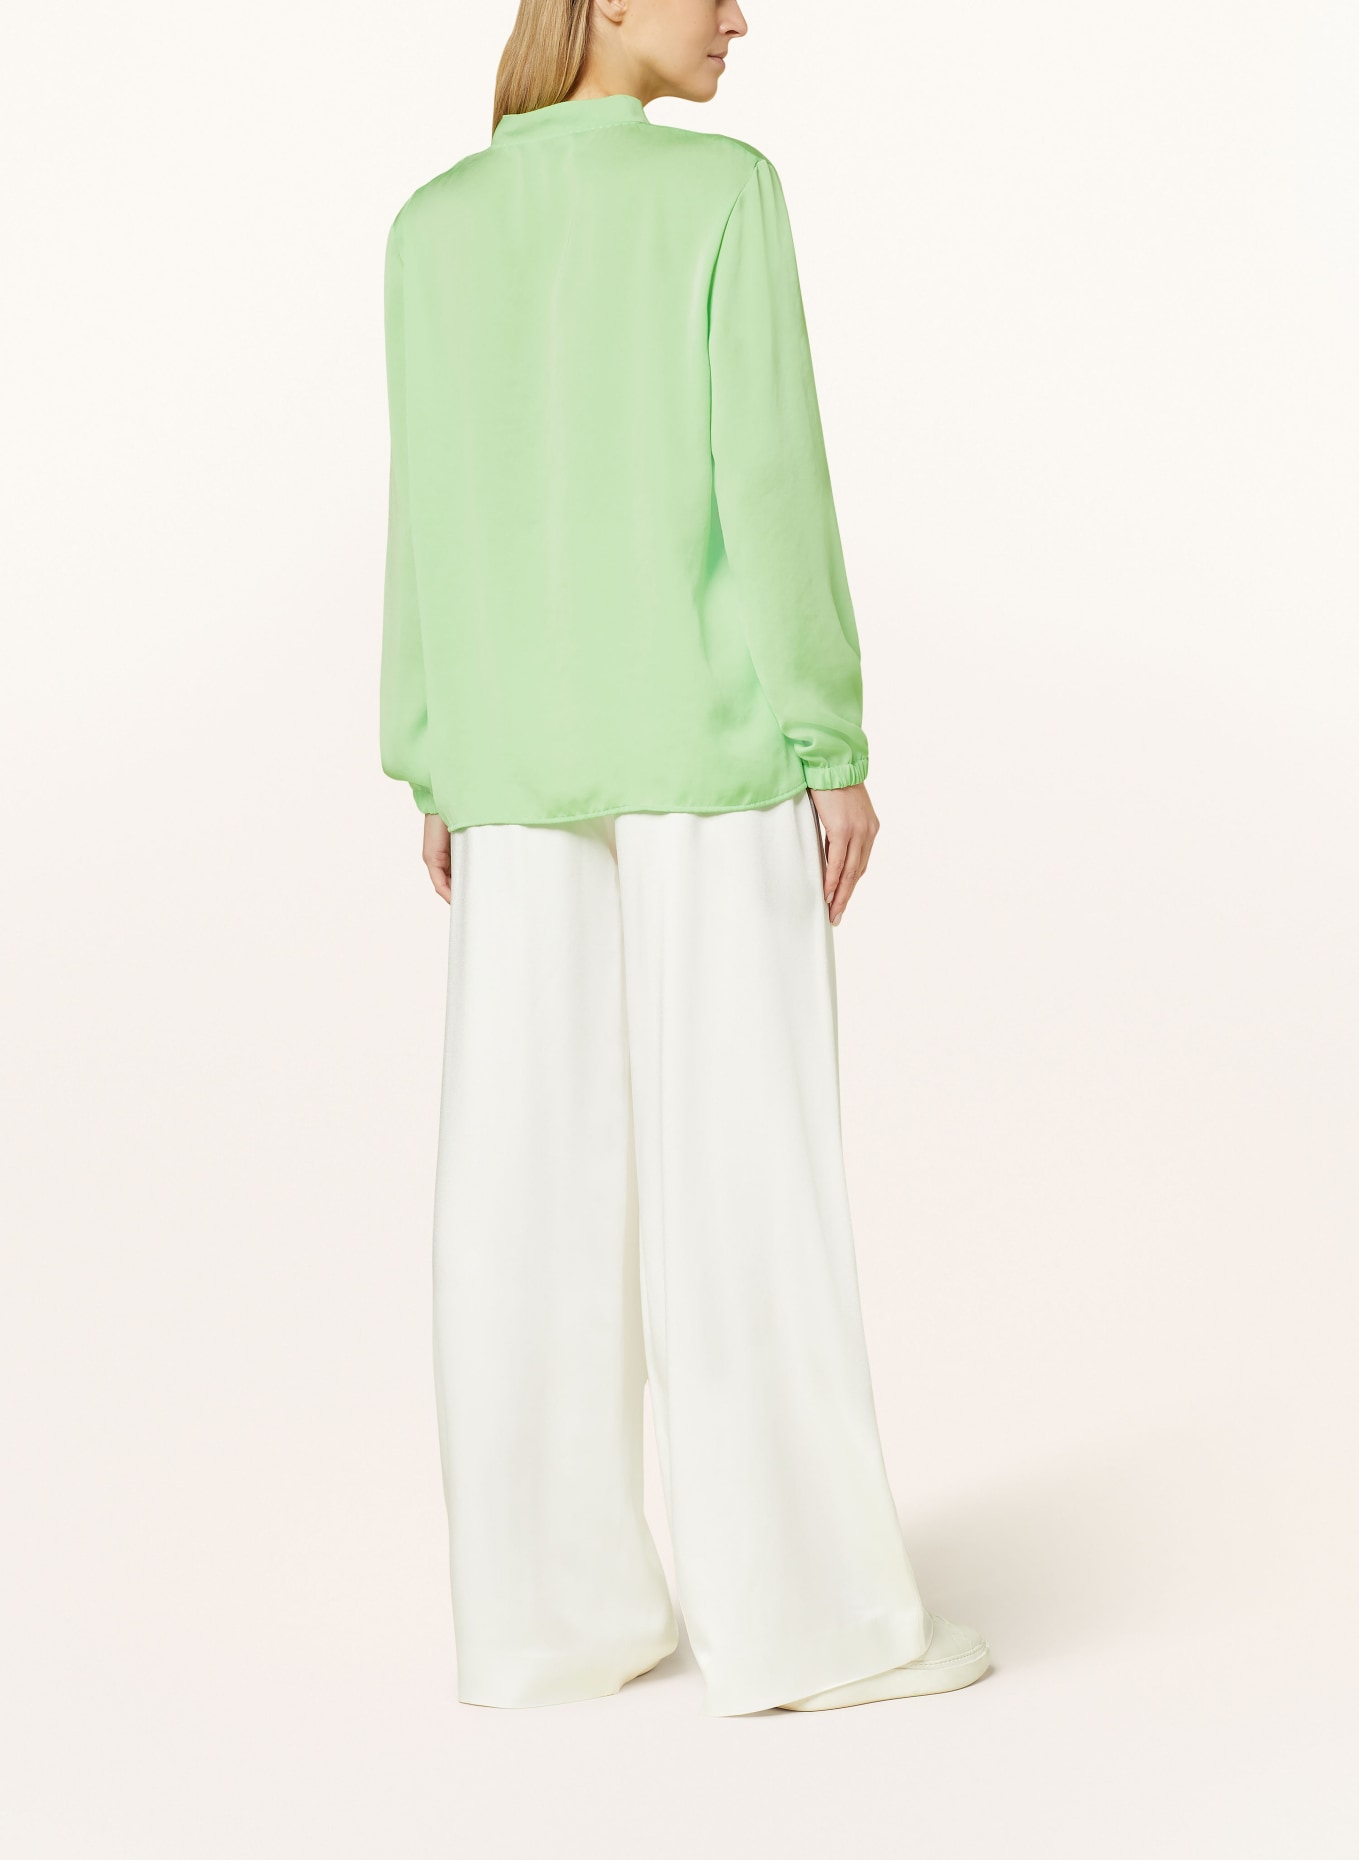 MARC CAIN Bluse, Farbe: 531 light apple green (Bild 3)